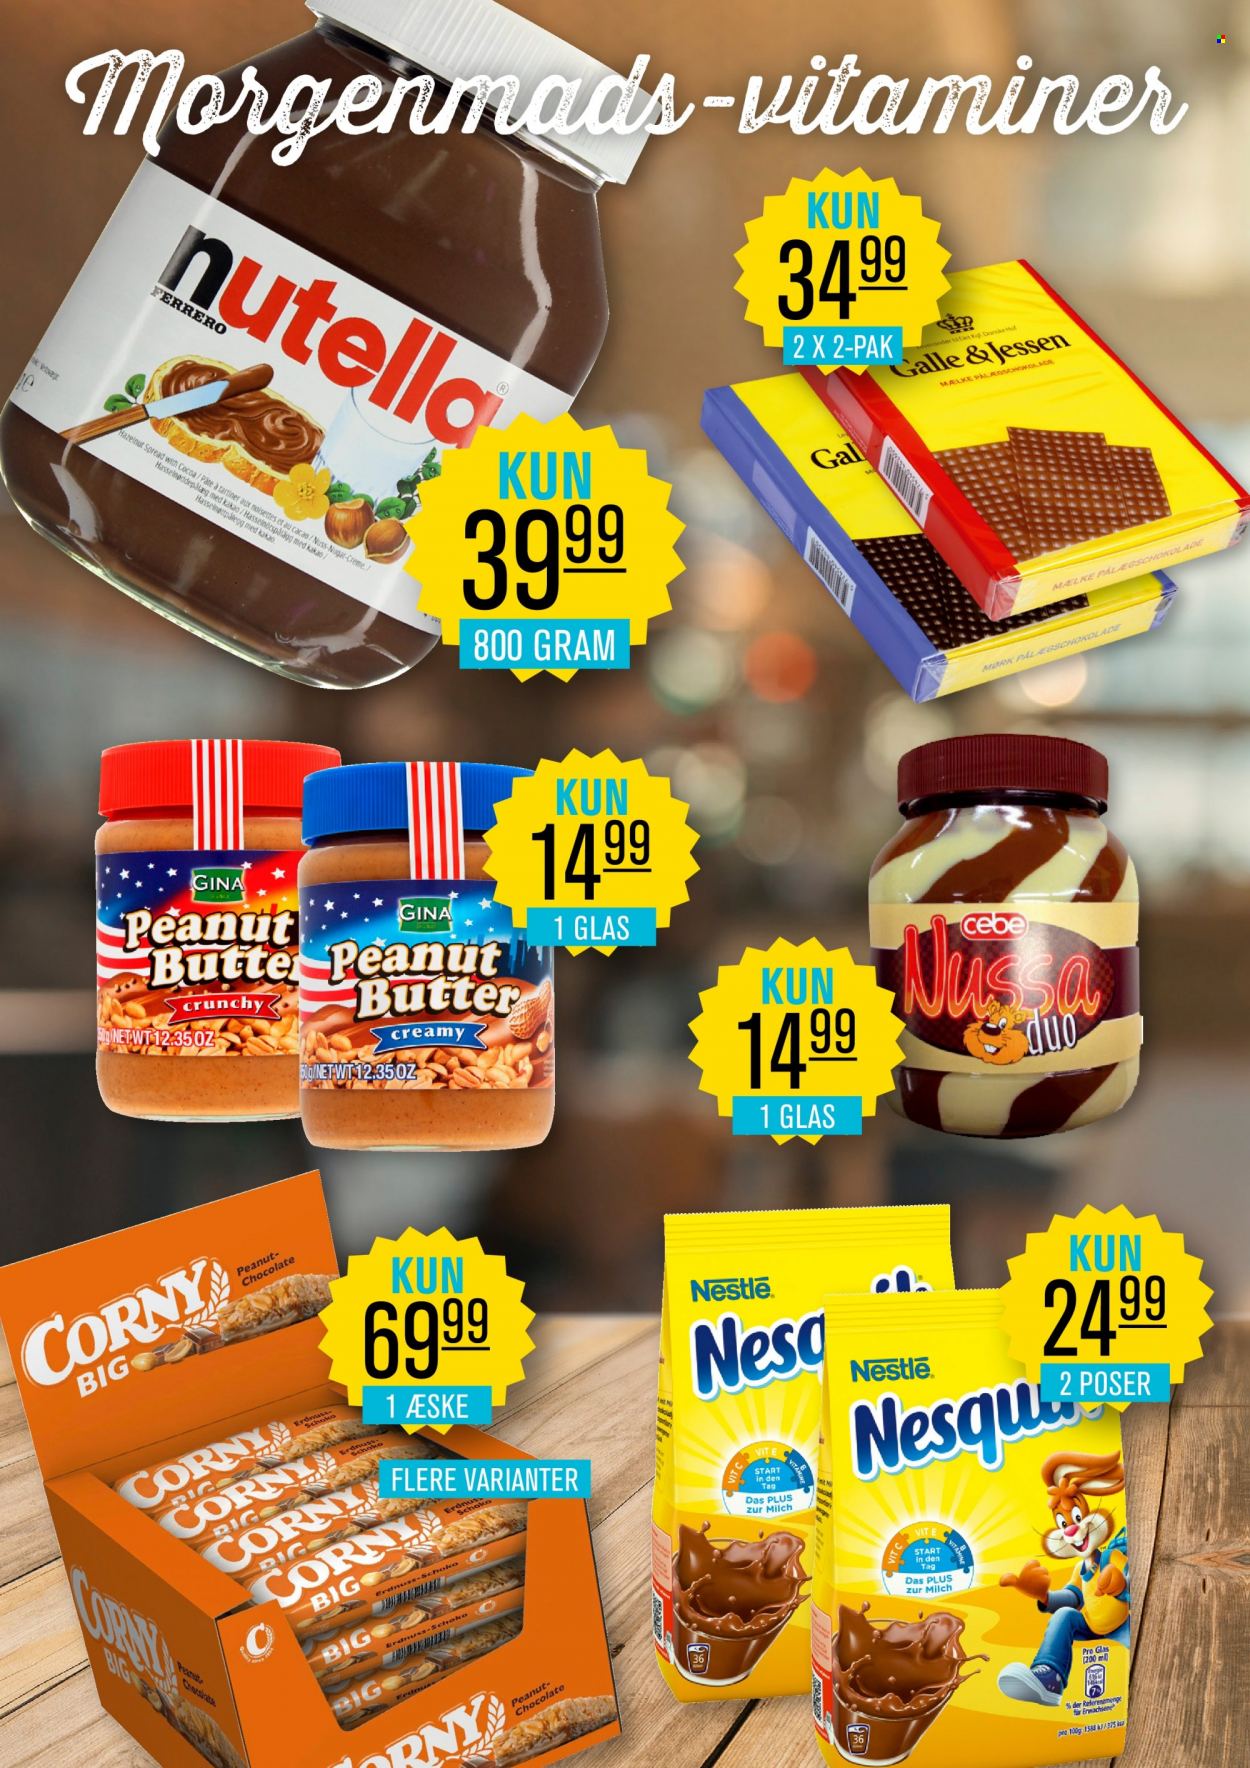 thumbnail - Priss tilbud  - 5.1.2022 - 29.3.2022 - tilbudsprodukter - Nestlé, Ferrero Rocher, chokolade, pålægschokolade, kakao, Corny, Nutella, peanutbutter. Side 6.